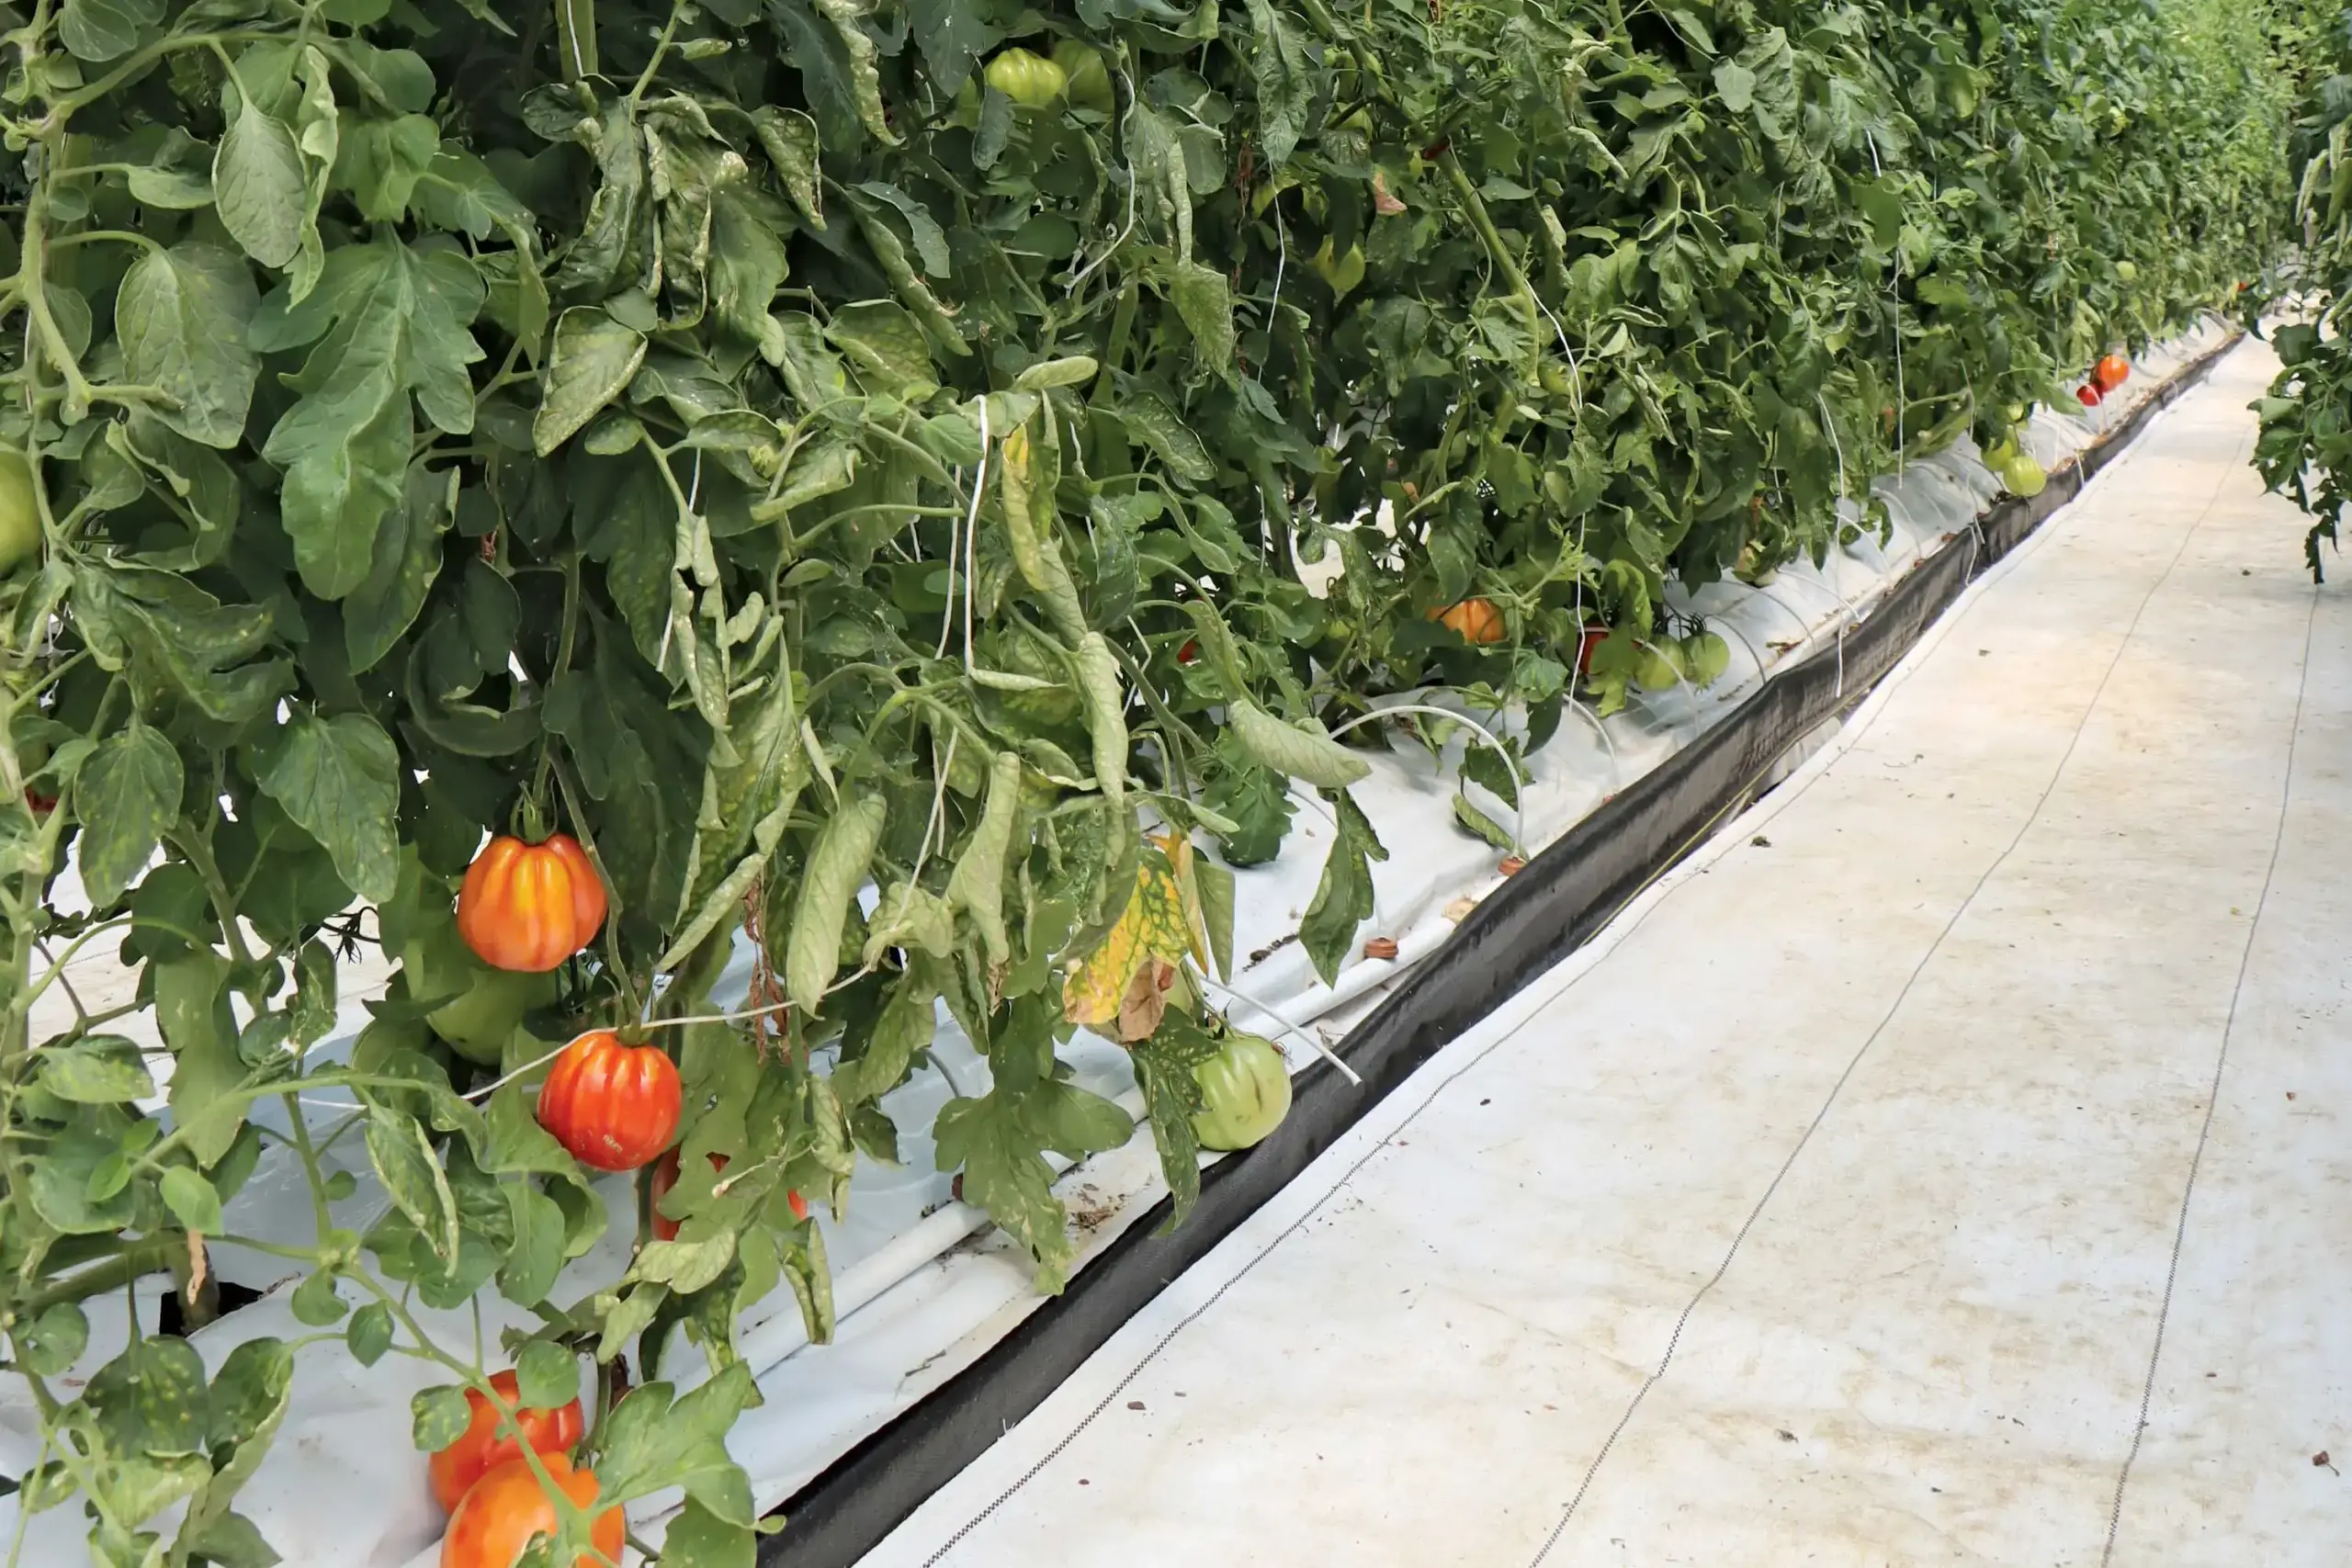 Tomato plants using drip irrigation inside greenhouse